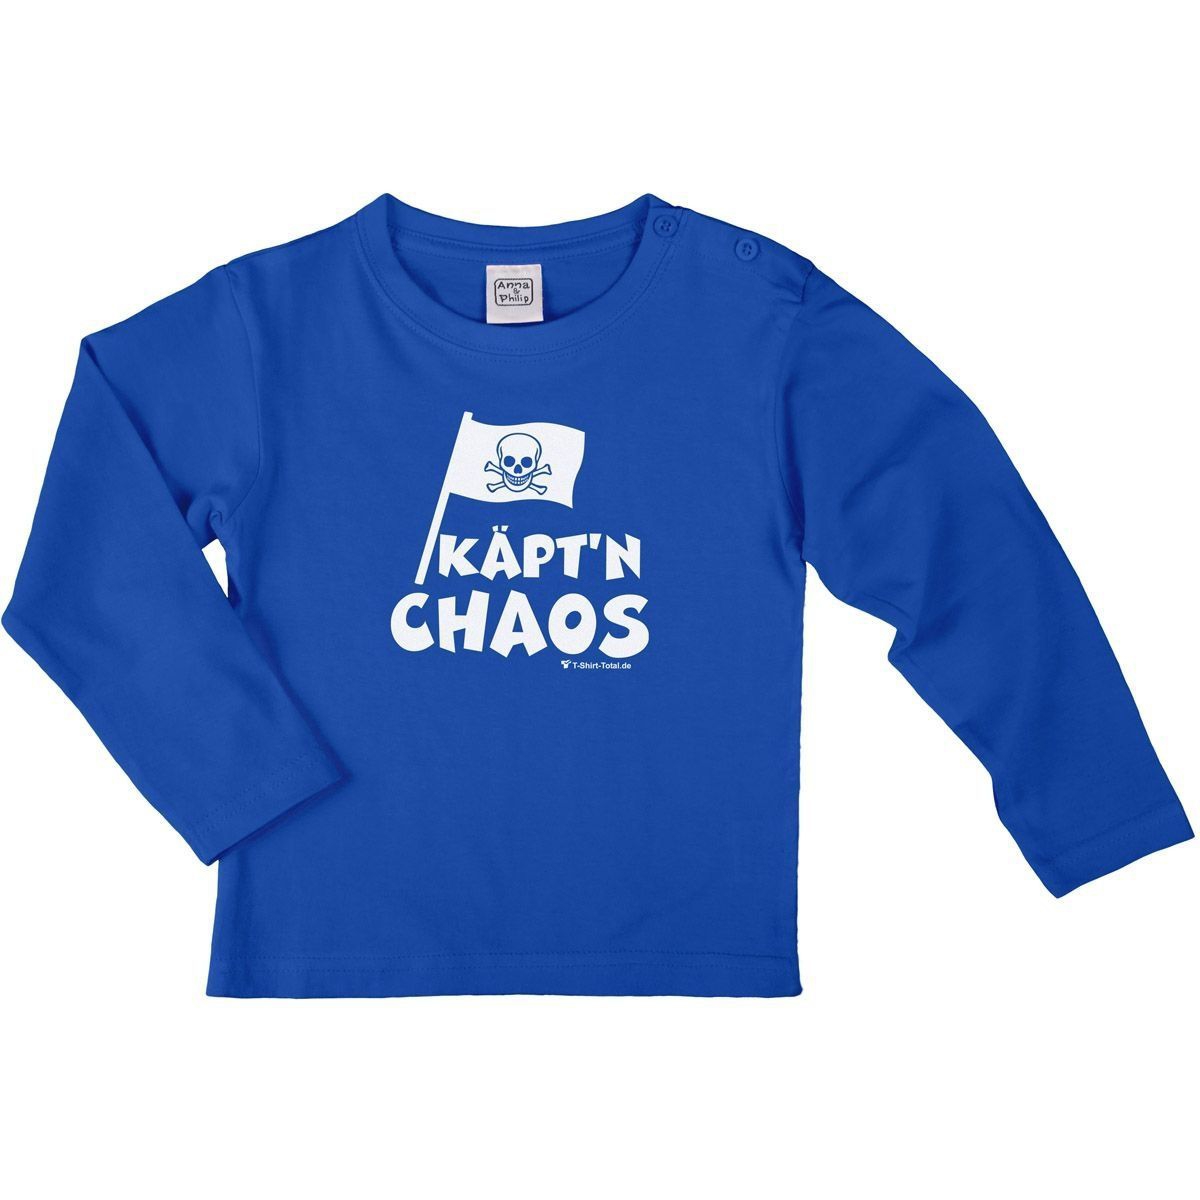 Käptn Chaos Kinder Langarm Shirt royal 134 / 140